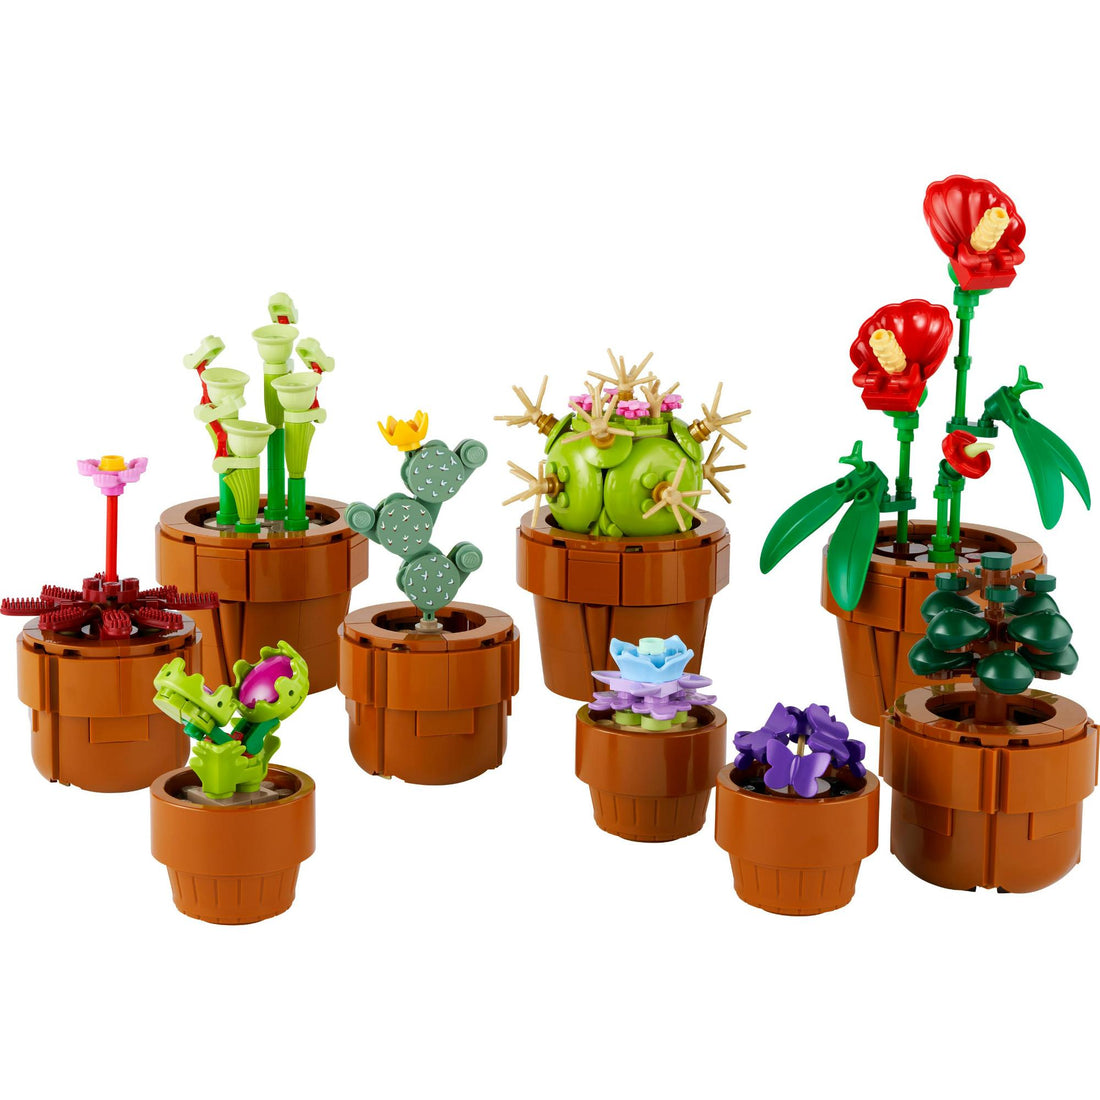 Lego Icons- Tiny Plants